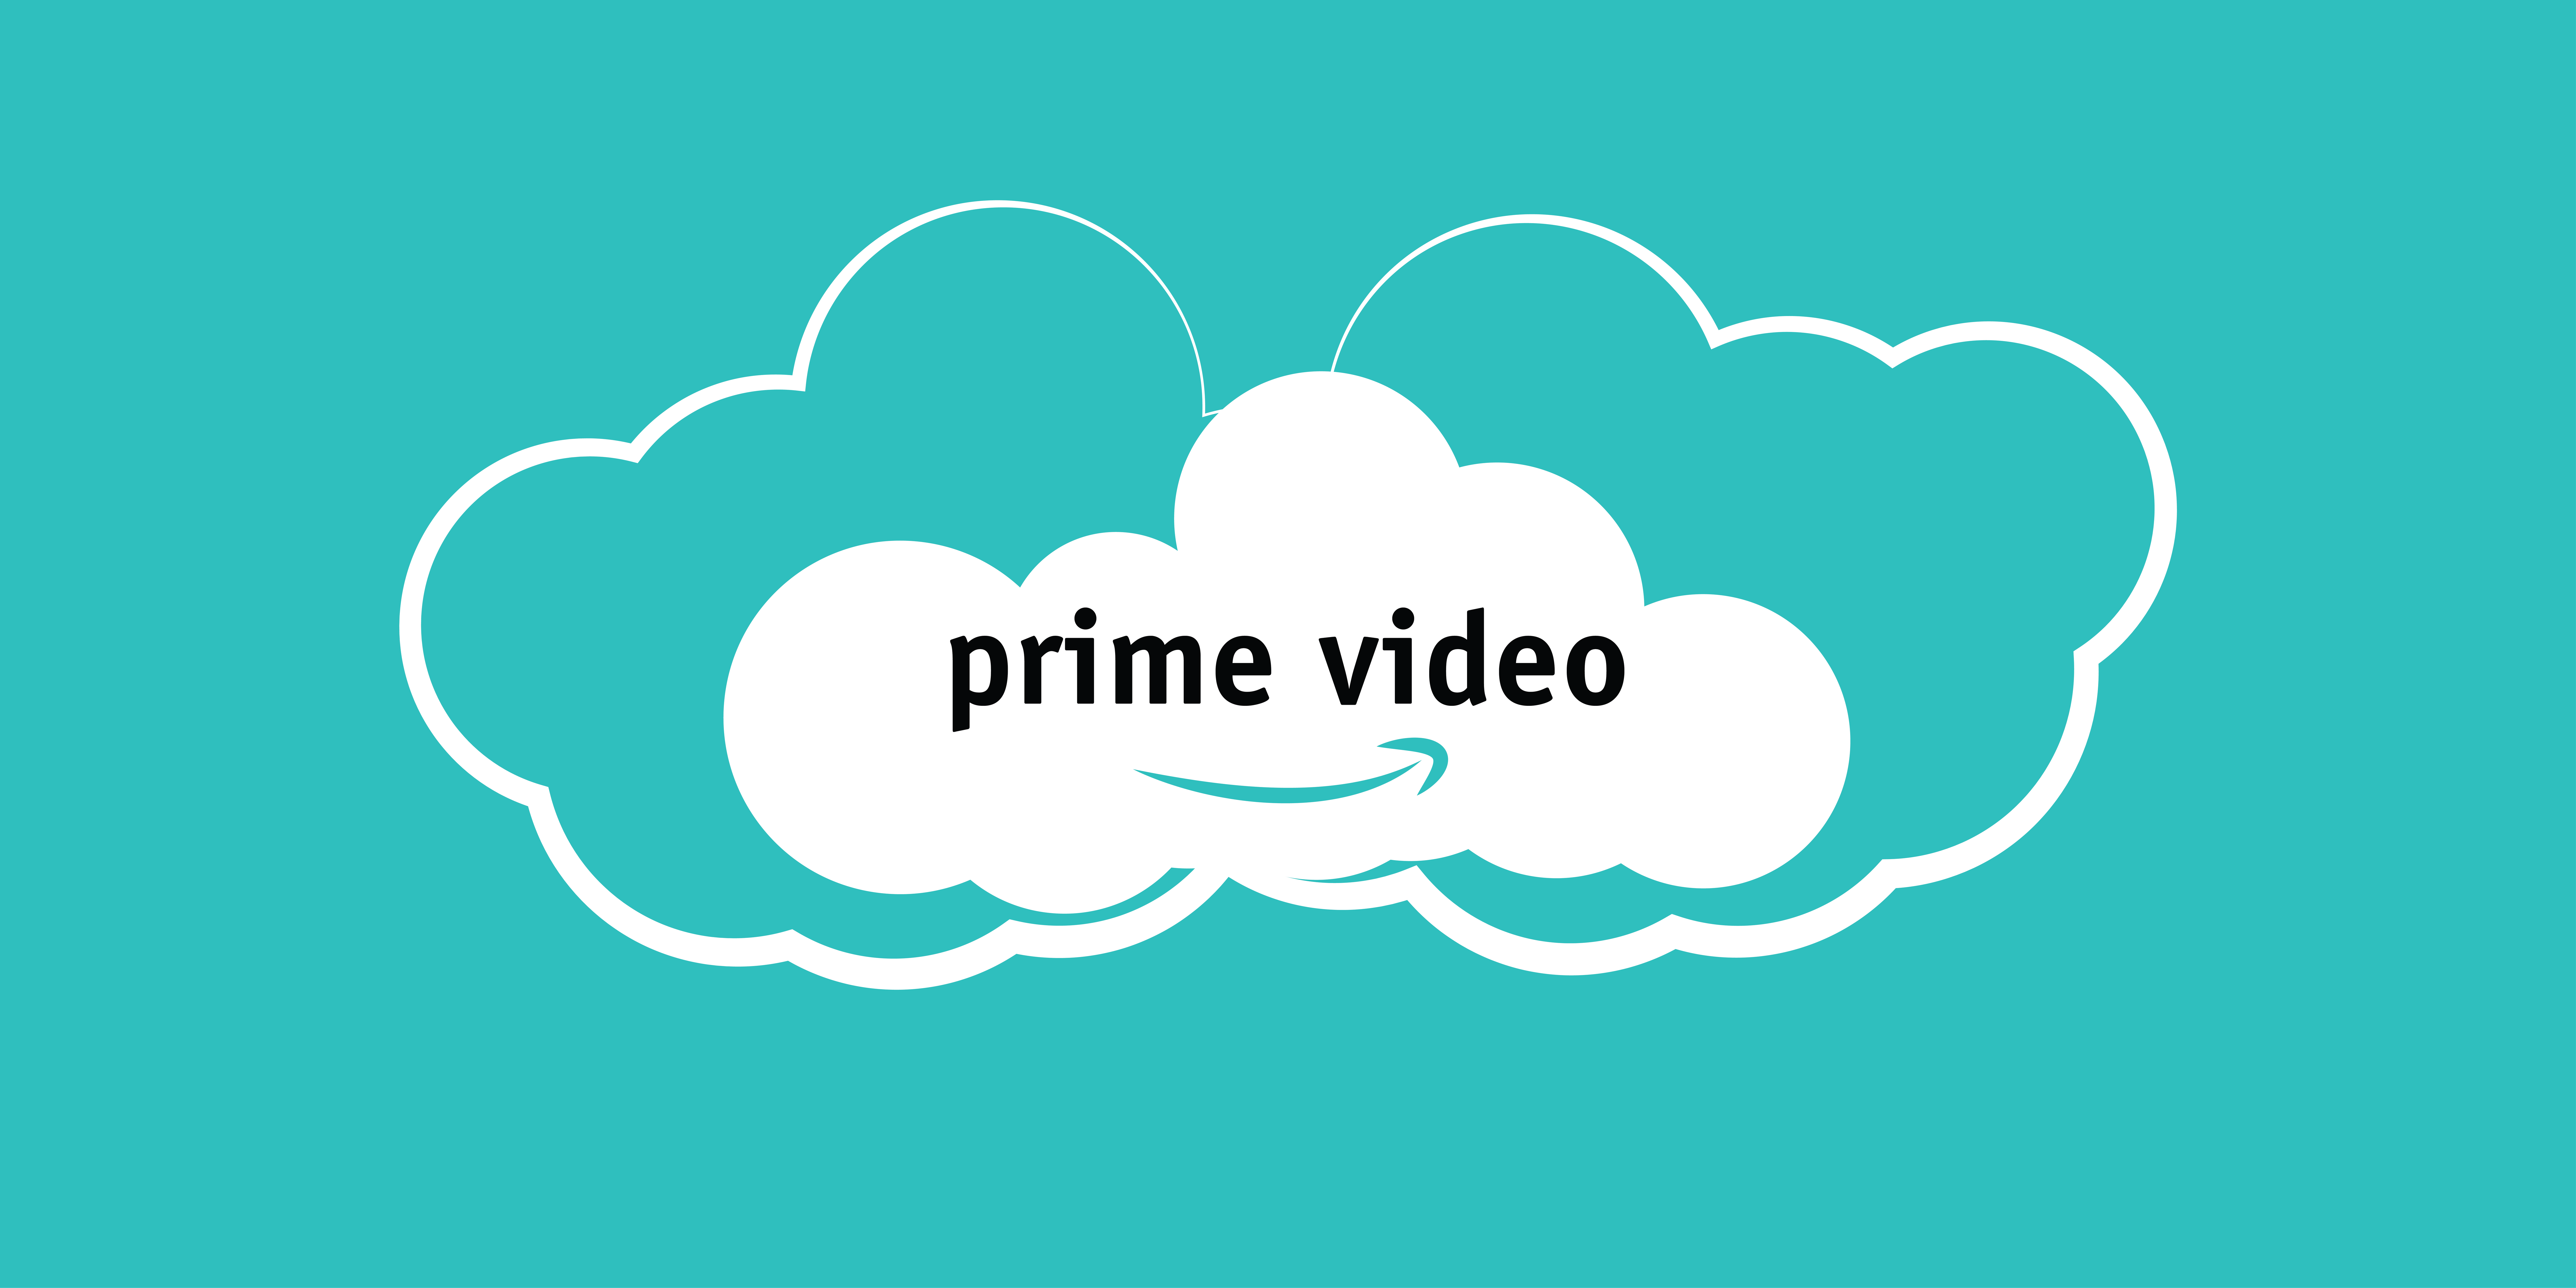 Amazon prime video illustration